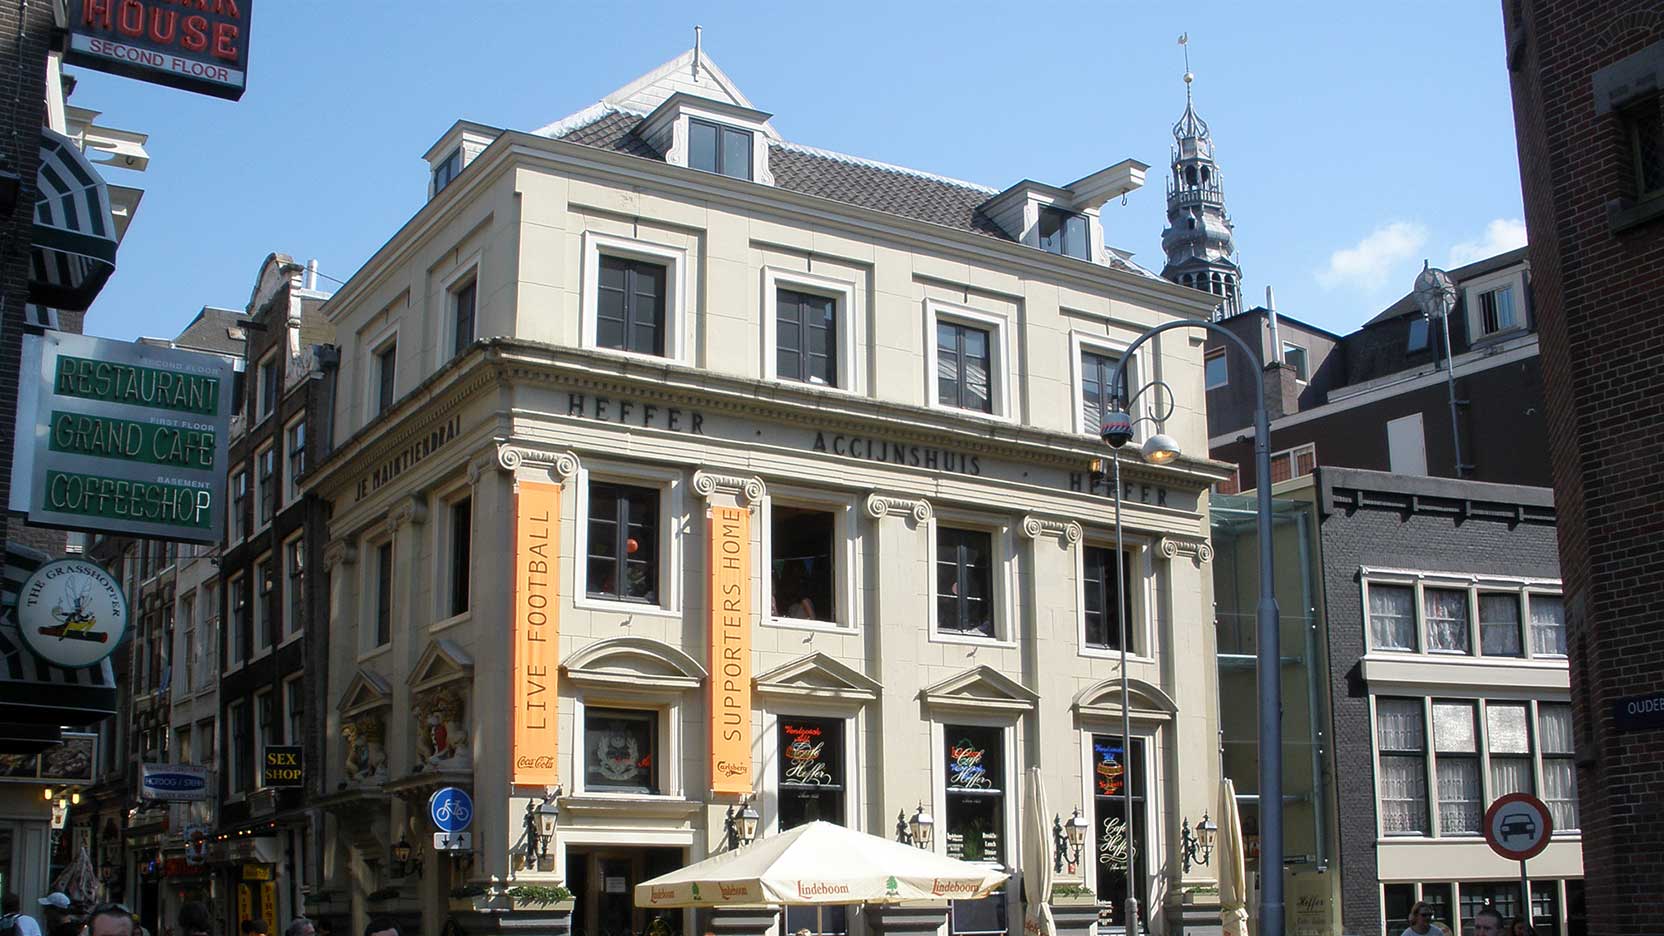 Accijnshuis, Amsterdam